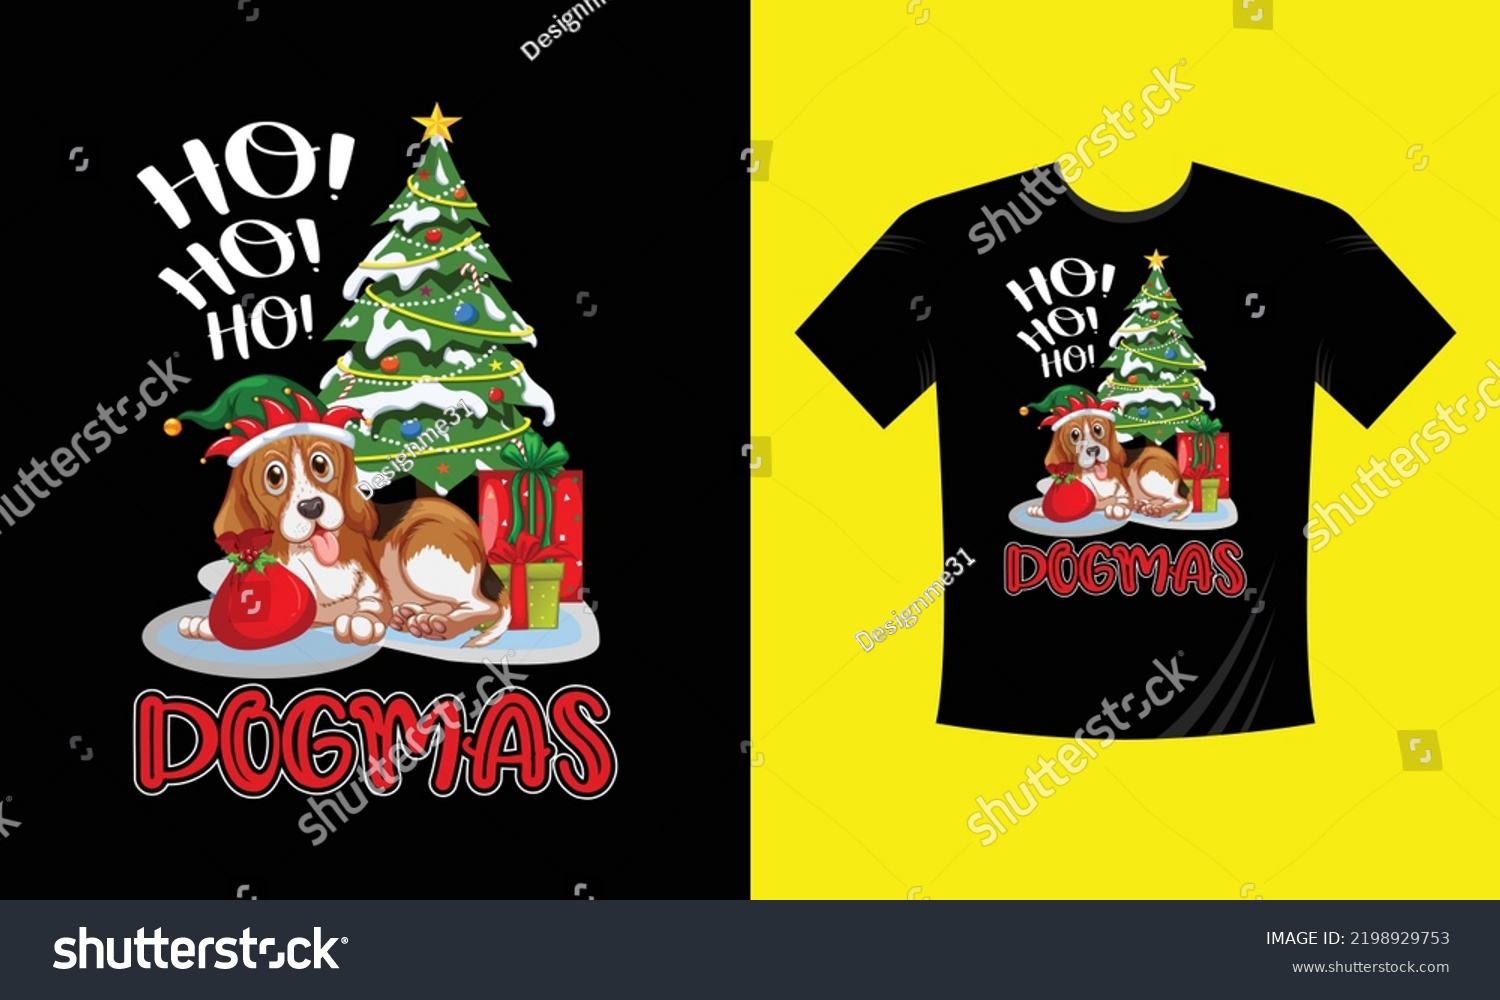 SVG of ho ho ho!!! dogmas - Christmas t shirt design free vector svg design template  svg